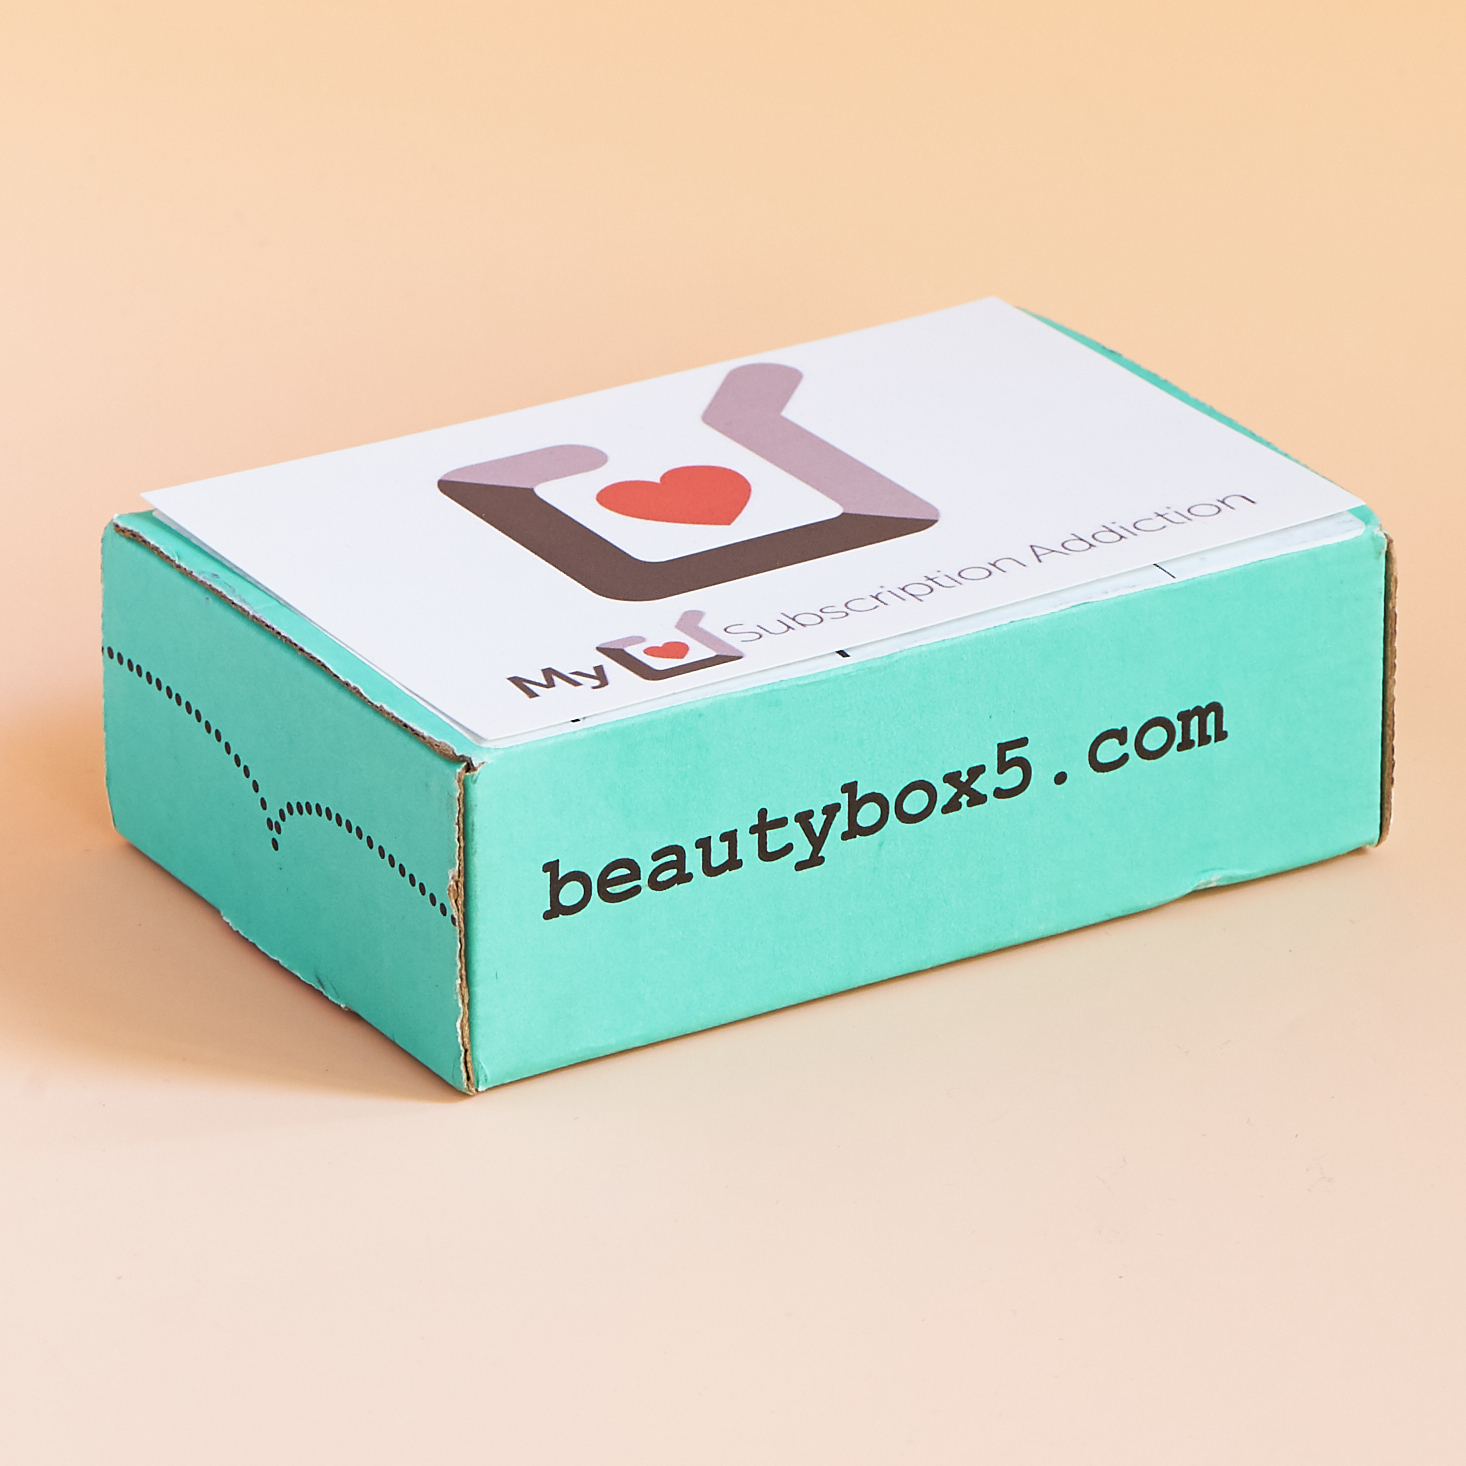 Beauty Box 5 – Better Than Black Friday Deal!